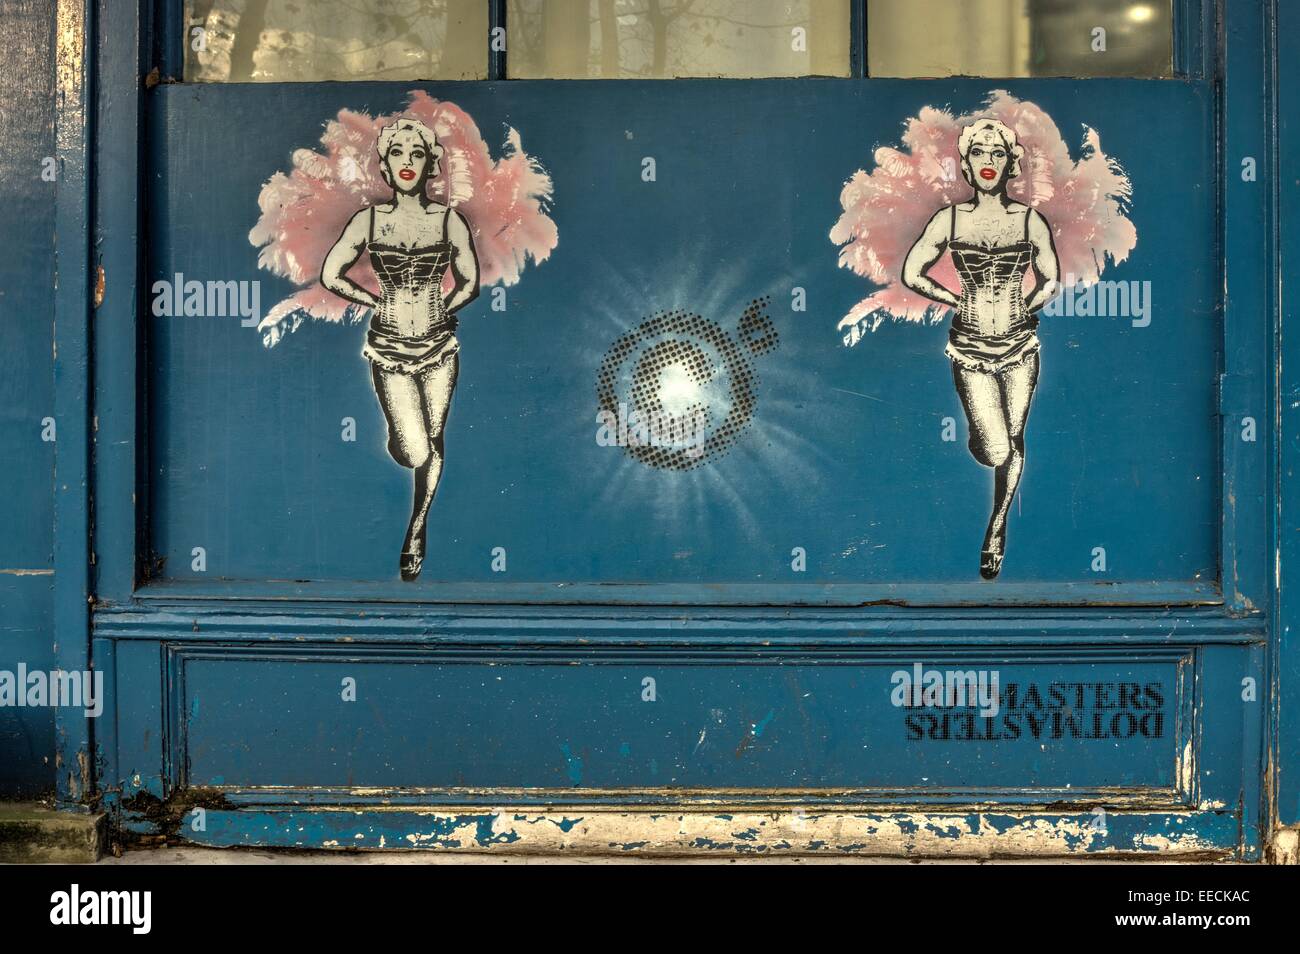 dancing girls graffiti London Stock Photo